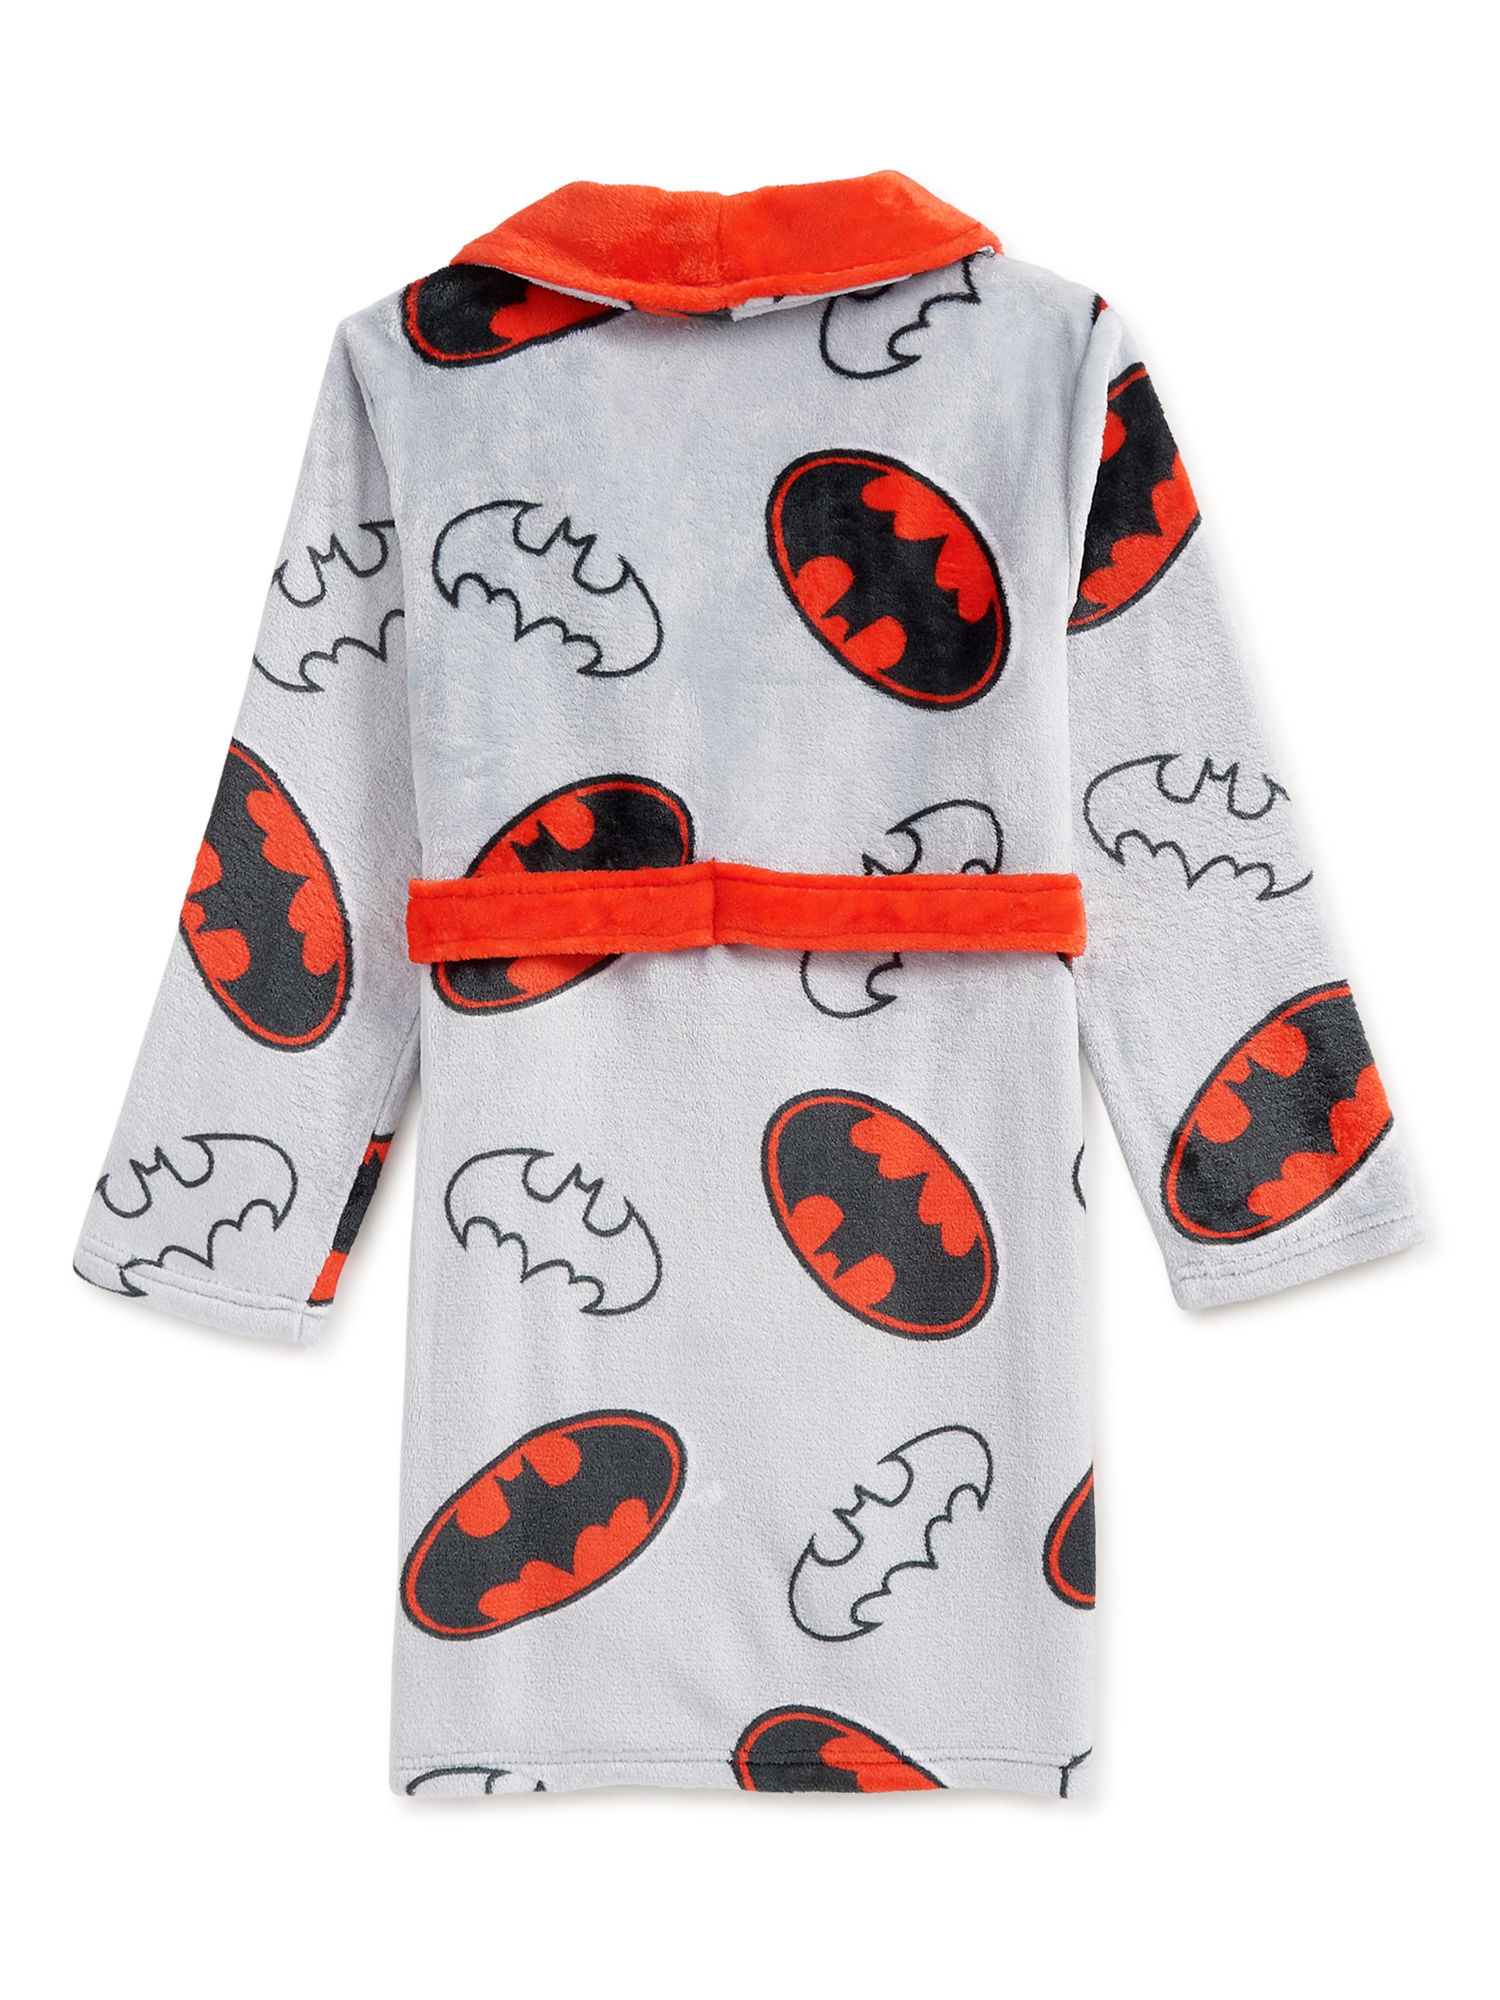 Batman Boys Pajama Robe with Slippers, Sizes 4-12 - image 2 of 3